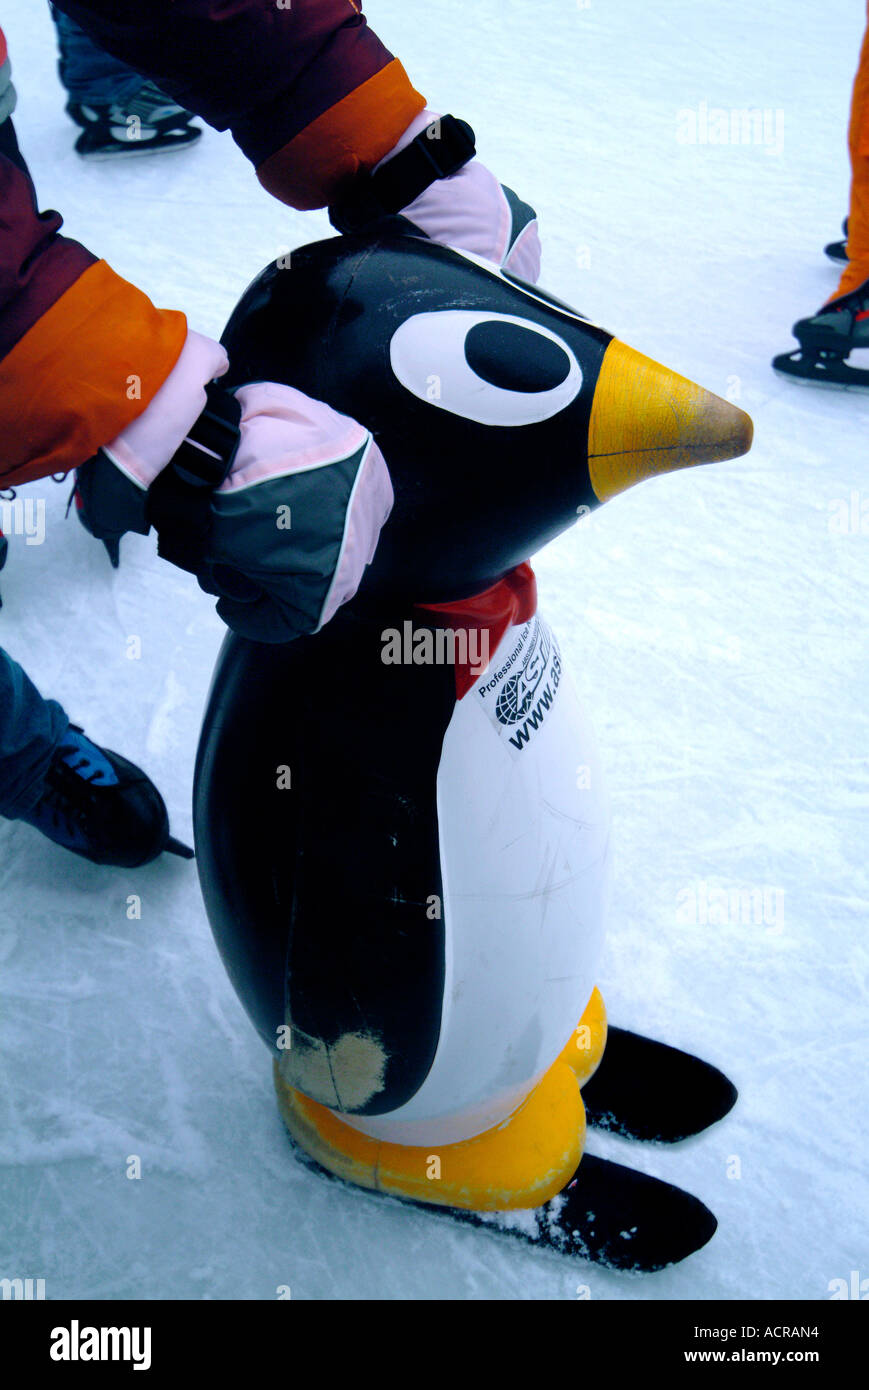 Pinguin aus Holz wie Eis-Eislauf Assistence Holzpinguin als Eislaufhilfe  Stockfotografie - Alamy